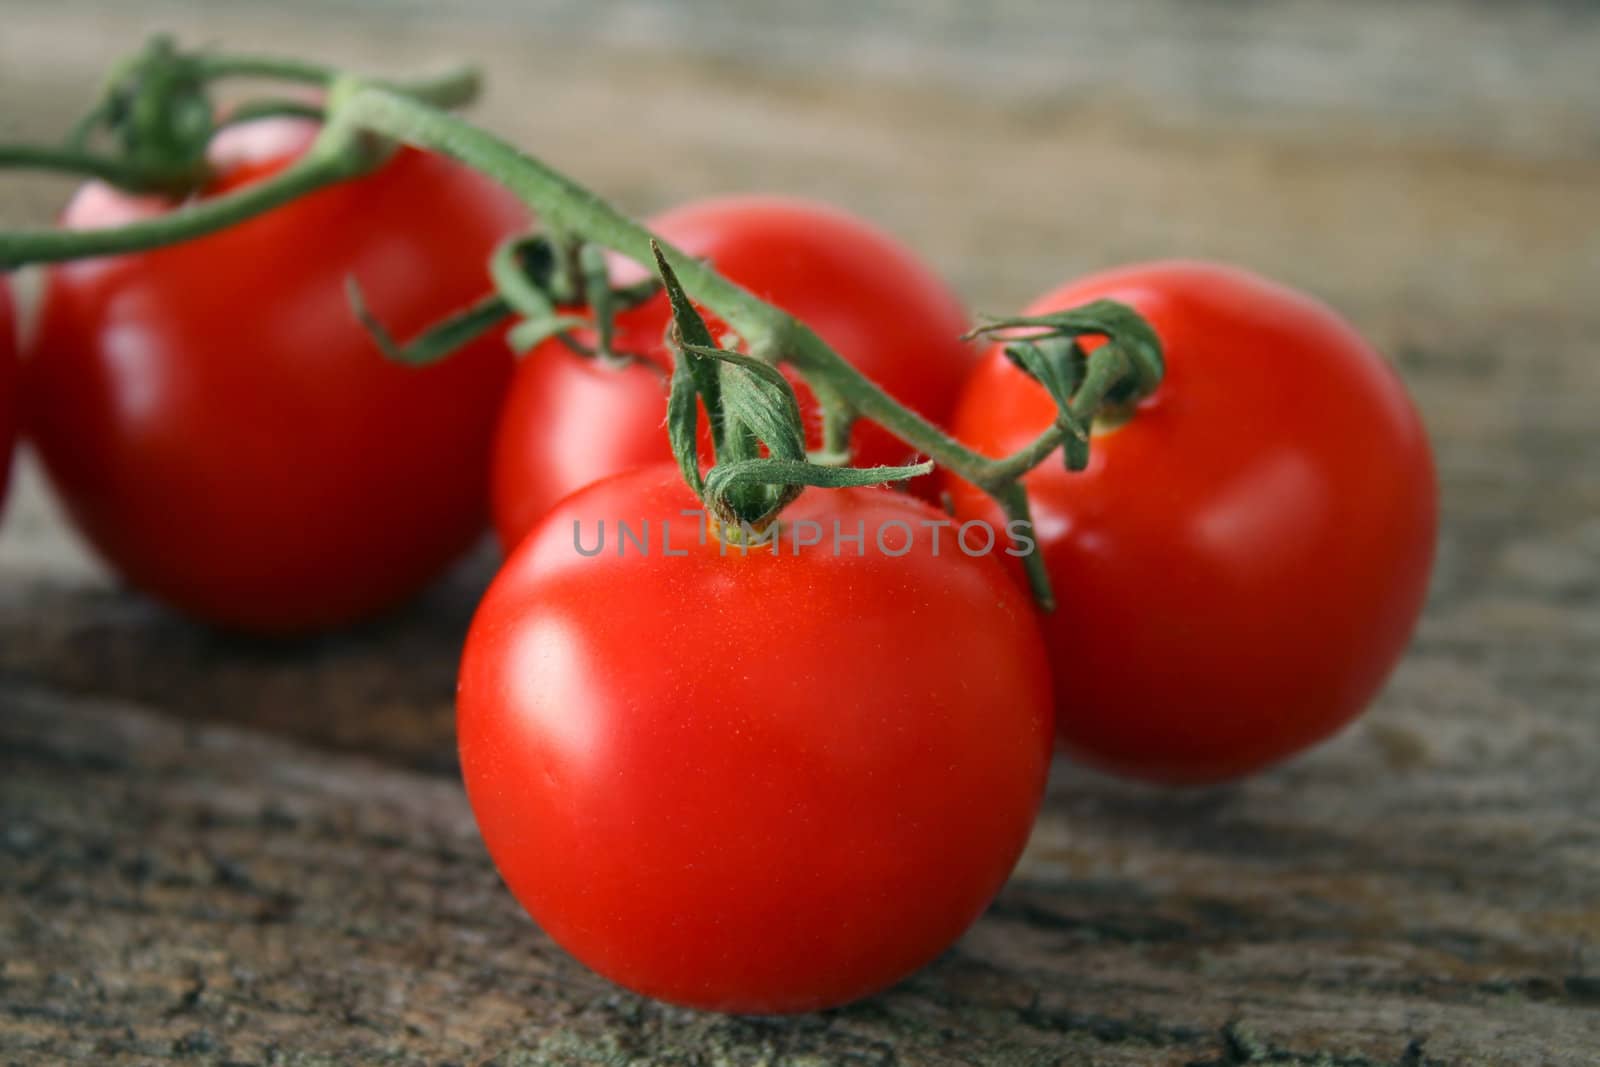 Vine Tomatoes by thephotoguy